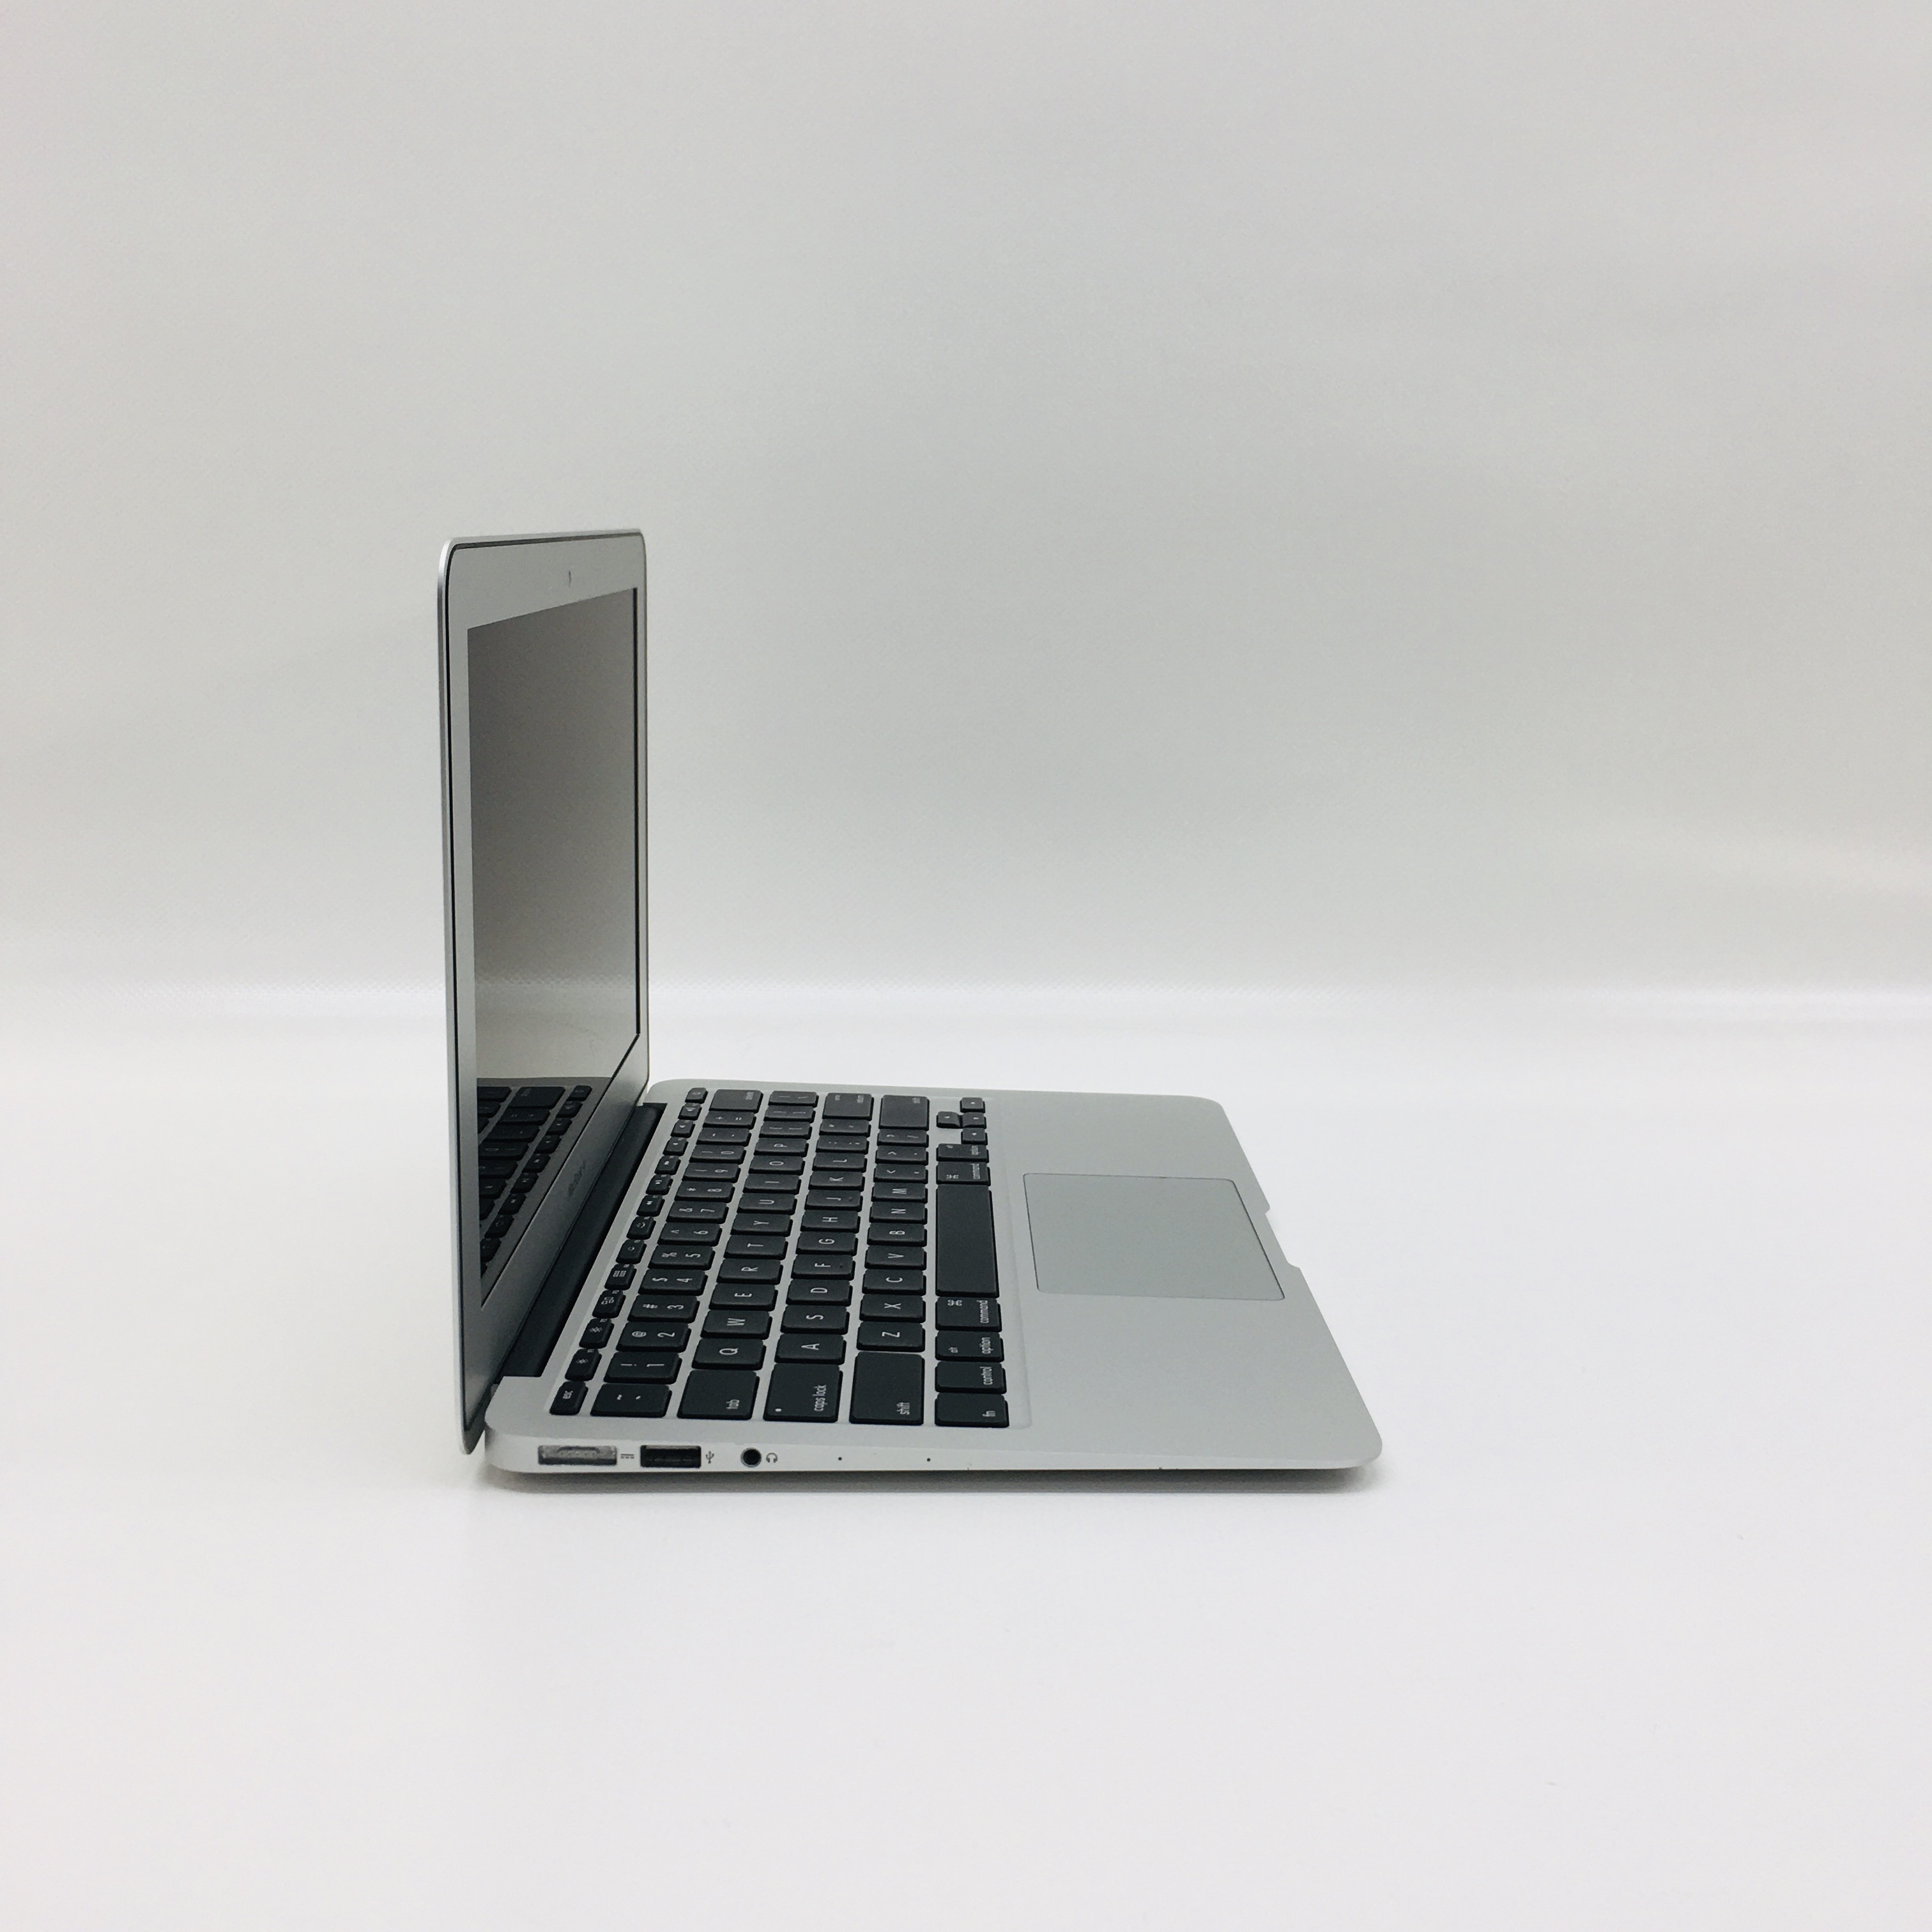 MacBook Air 11" Early 2015 (Intel Core i5 1.6 GHz 4 GB RAM 512 GB SSD), Intel Core i5 1.6 GHz, 4 GB RAM, 512 GB SSD, image 5